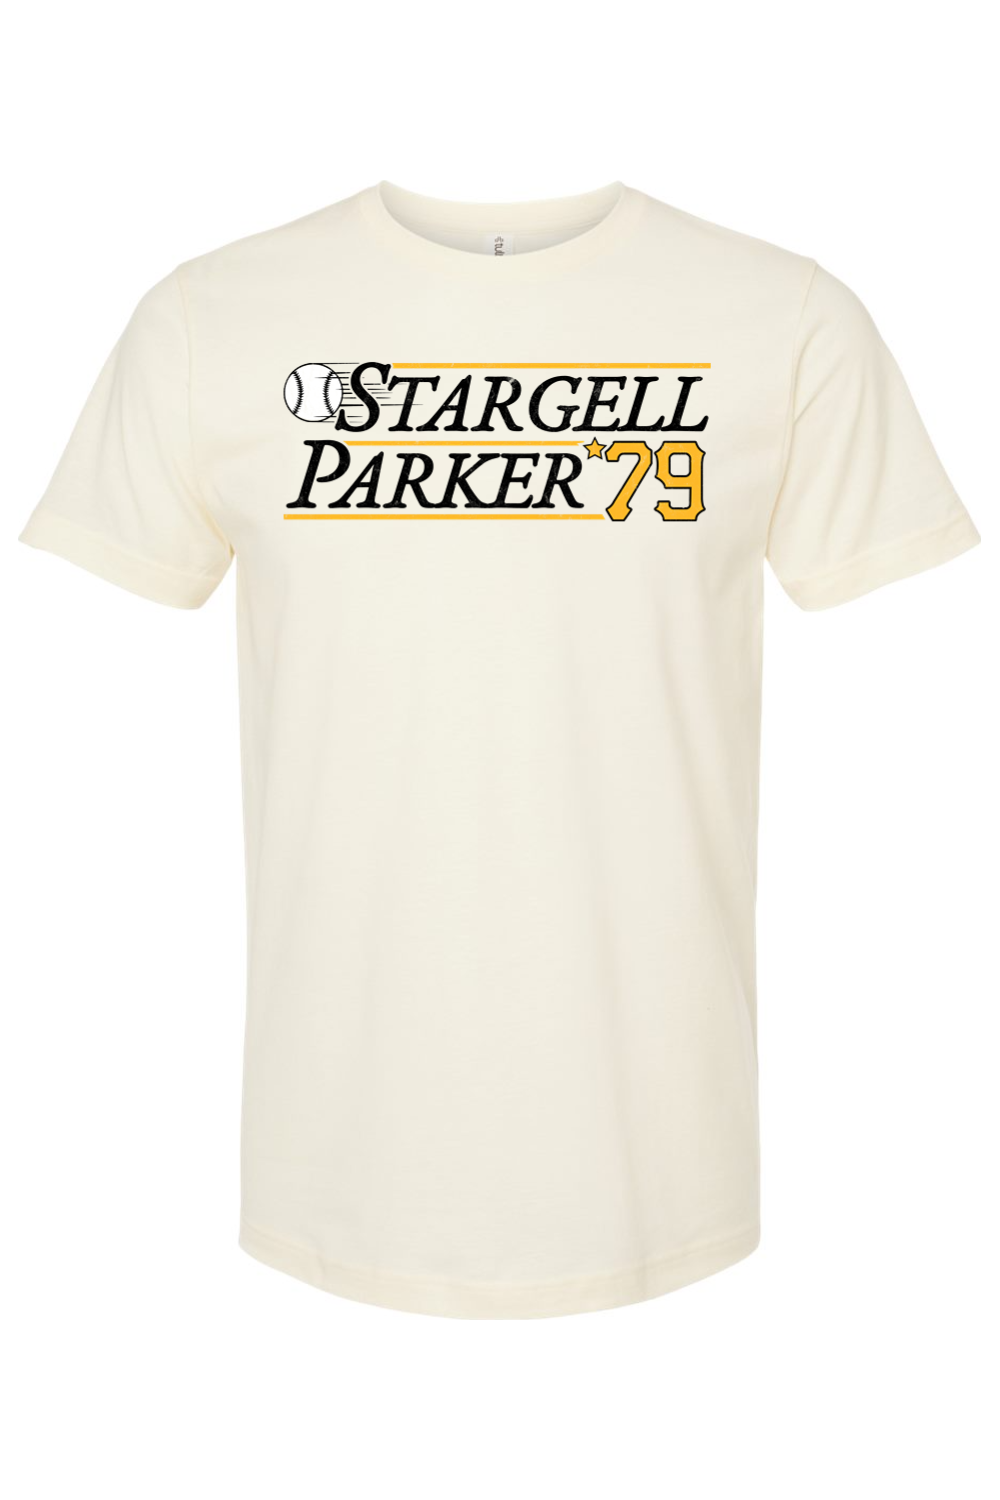 Stargell Parker '79 - Yinzylvania